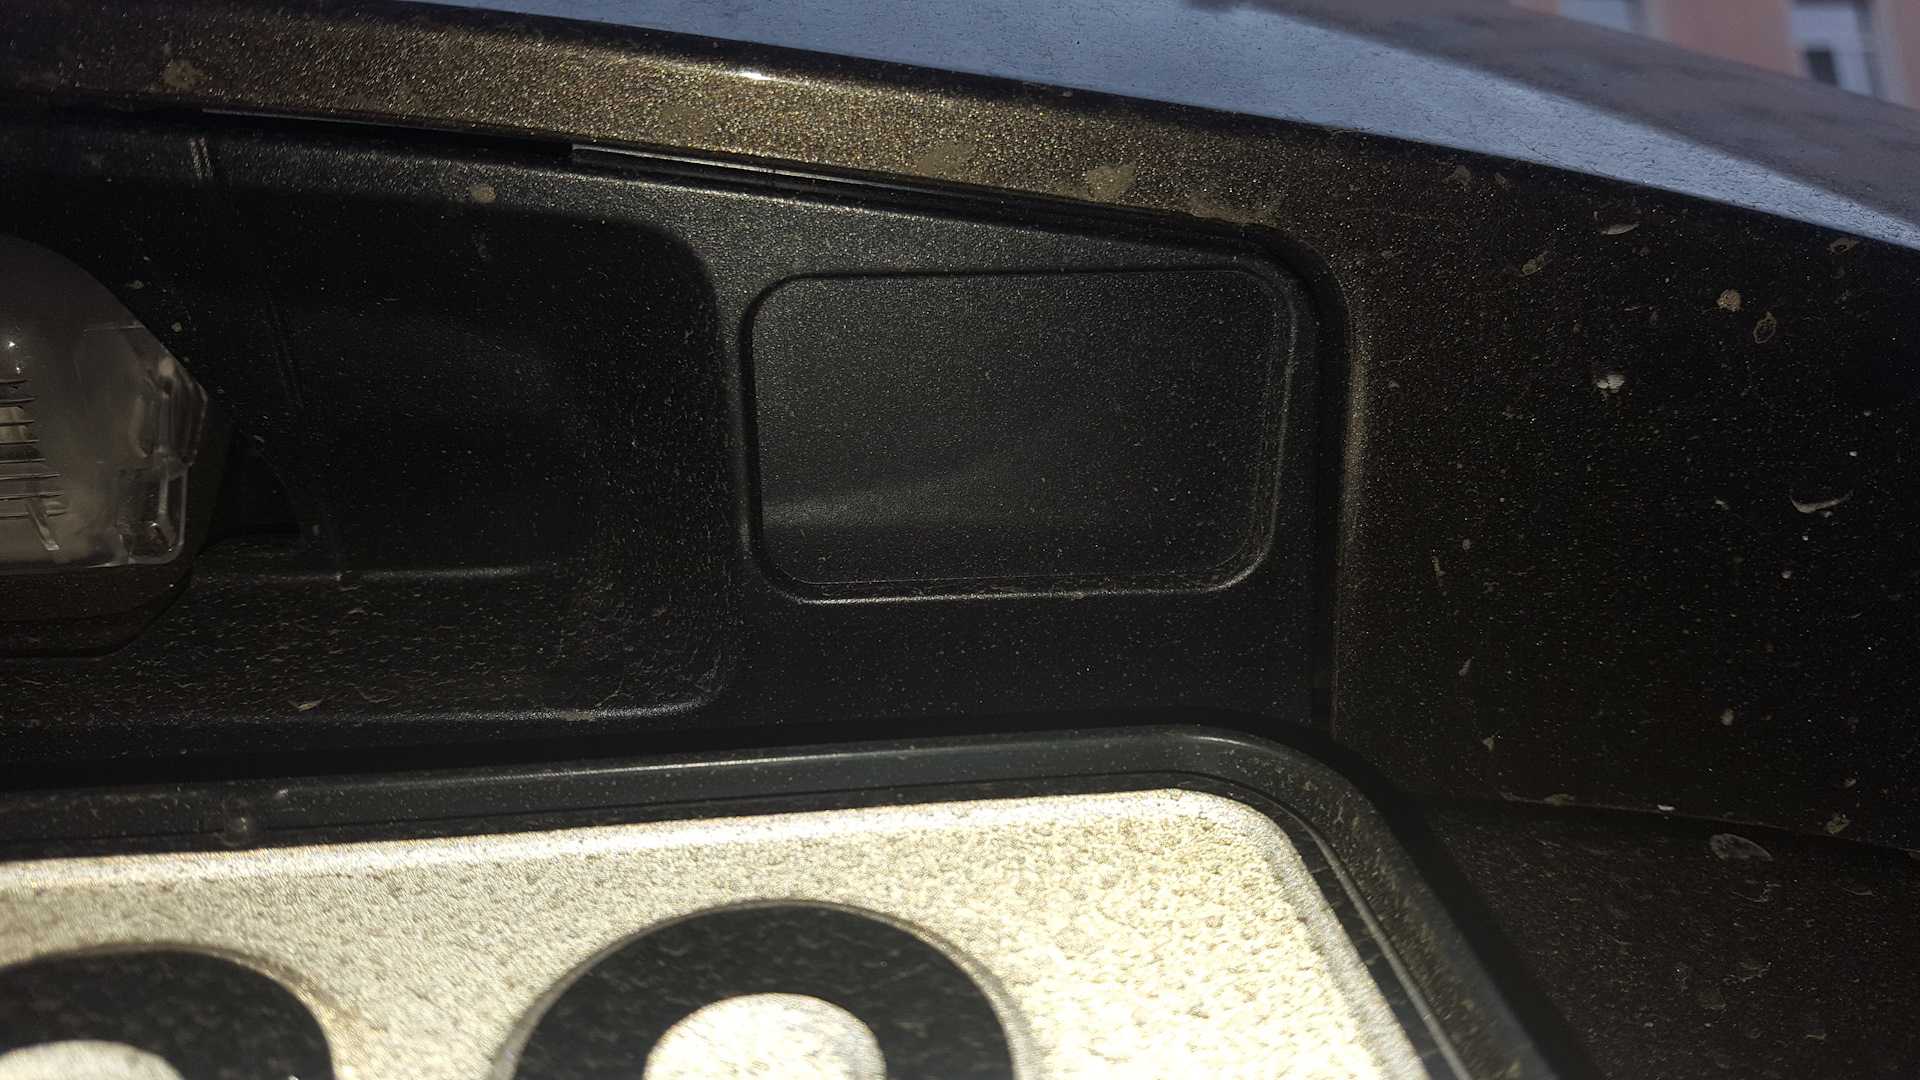 Кнопка багажника мазда сх 5. Кнопка открывания багажника Mazda CX 5. Кнопка открывания багажника Мазда СХ-5. Кнопка открытия багажника Mazda cx5. Кнопка открывания багажника Мазда СХ-5 2012.